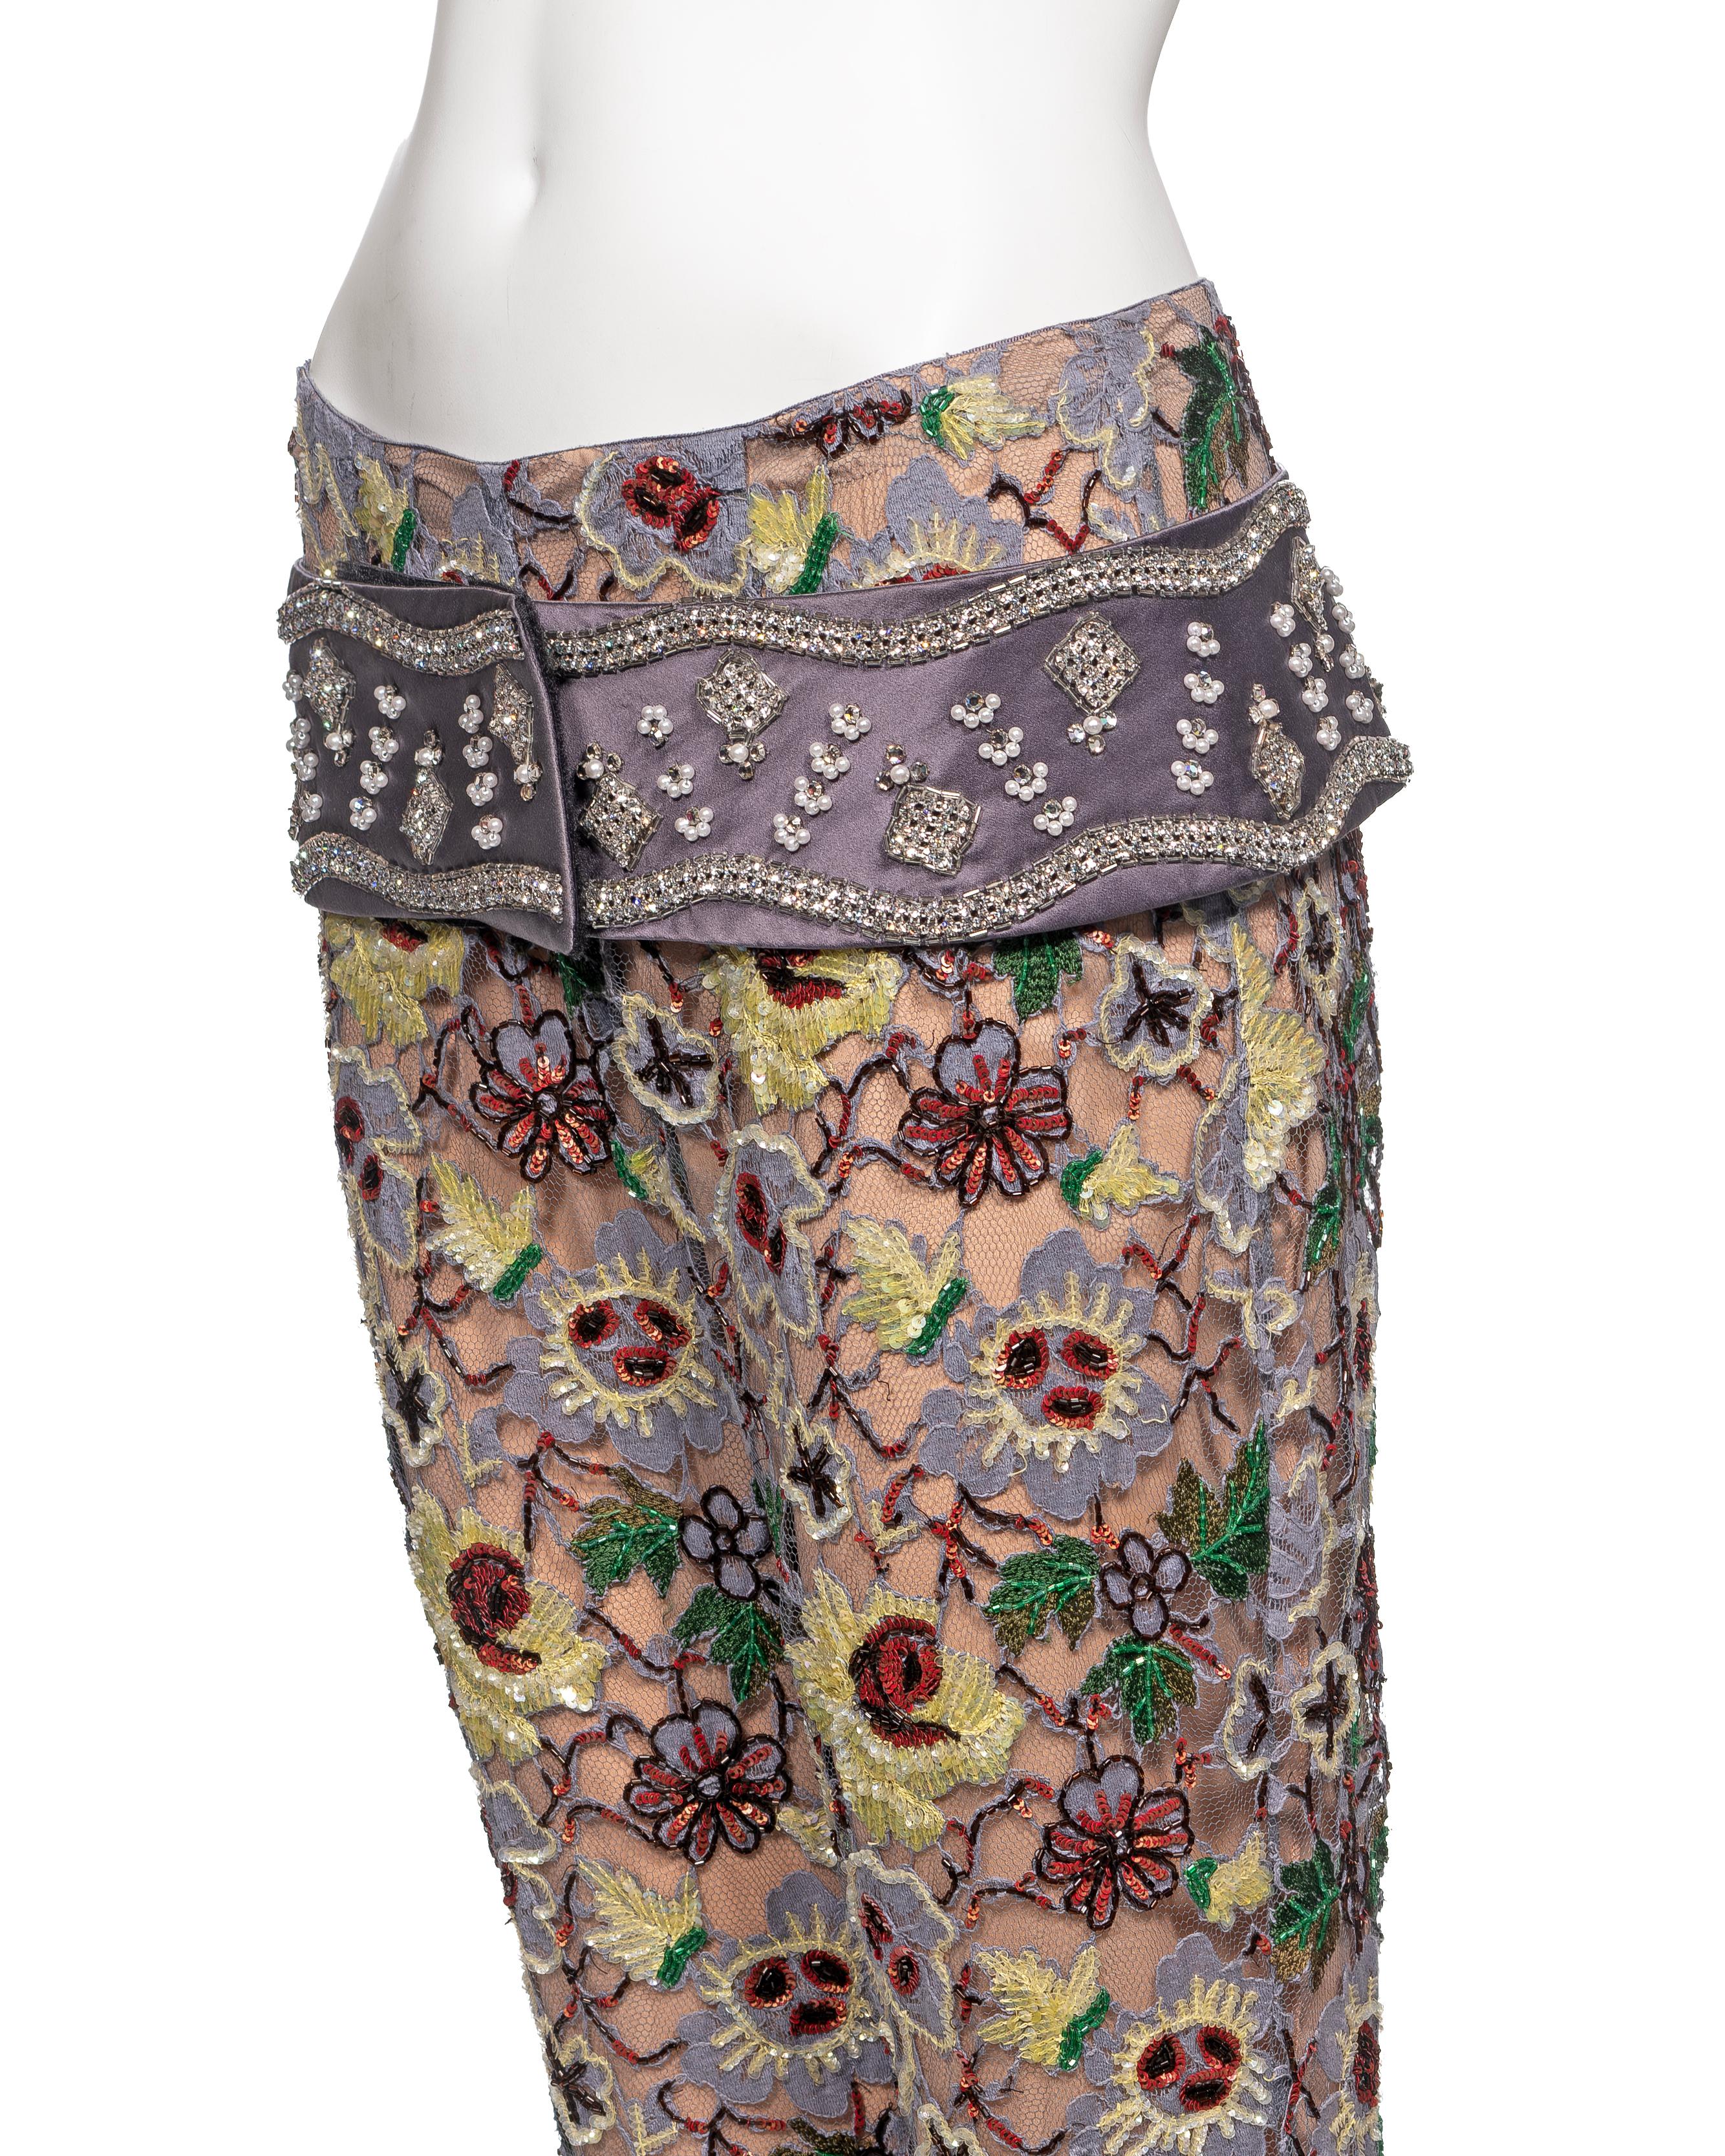 Dolce & Gabbana Embellished Lace Capri Pants and Belt Set, FW 1999 For Sale 9